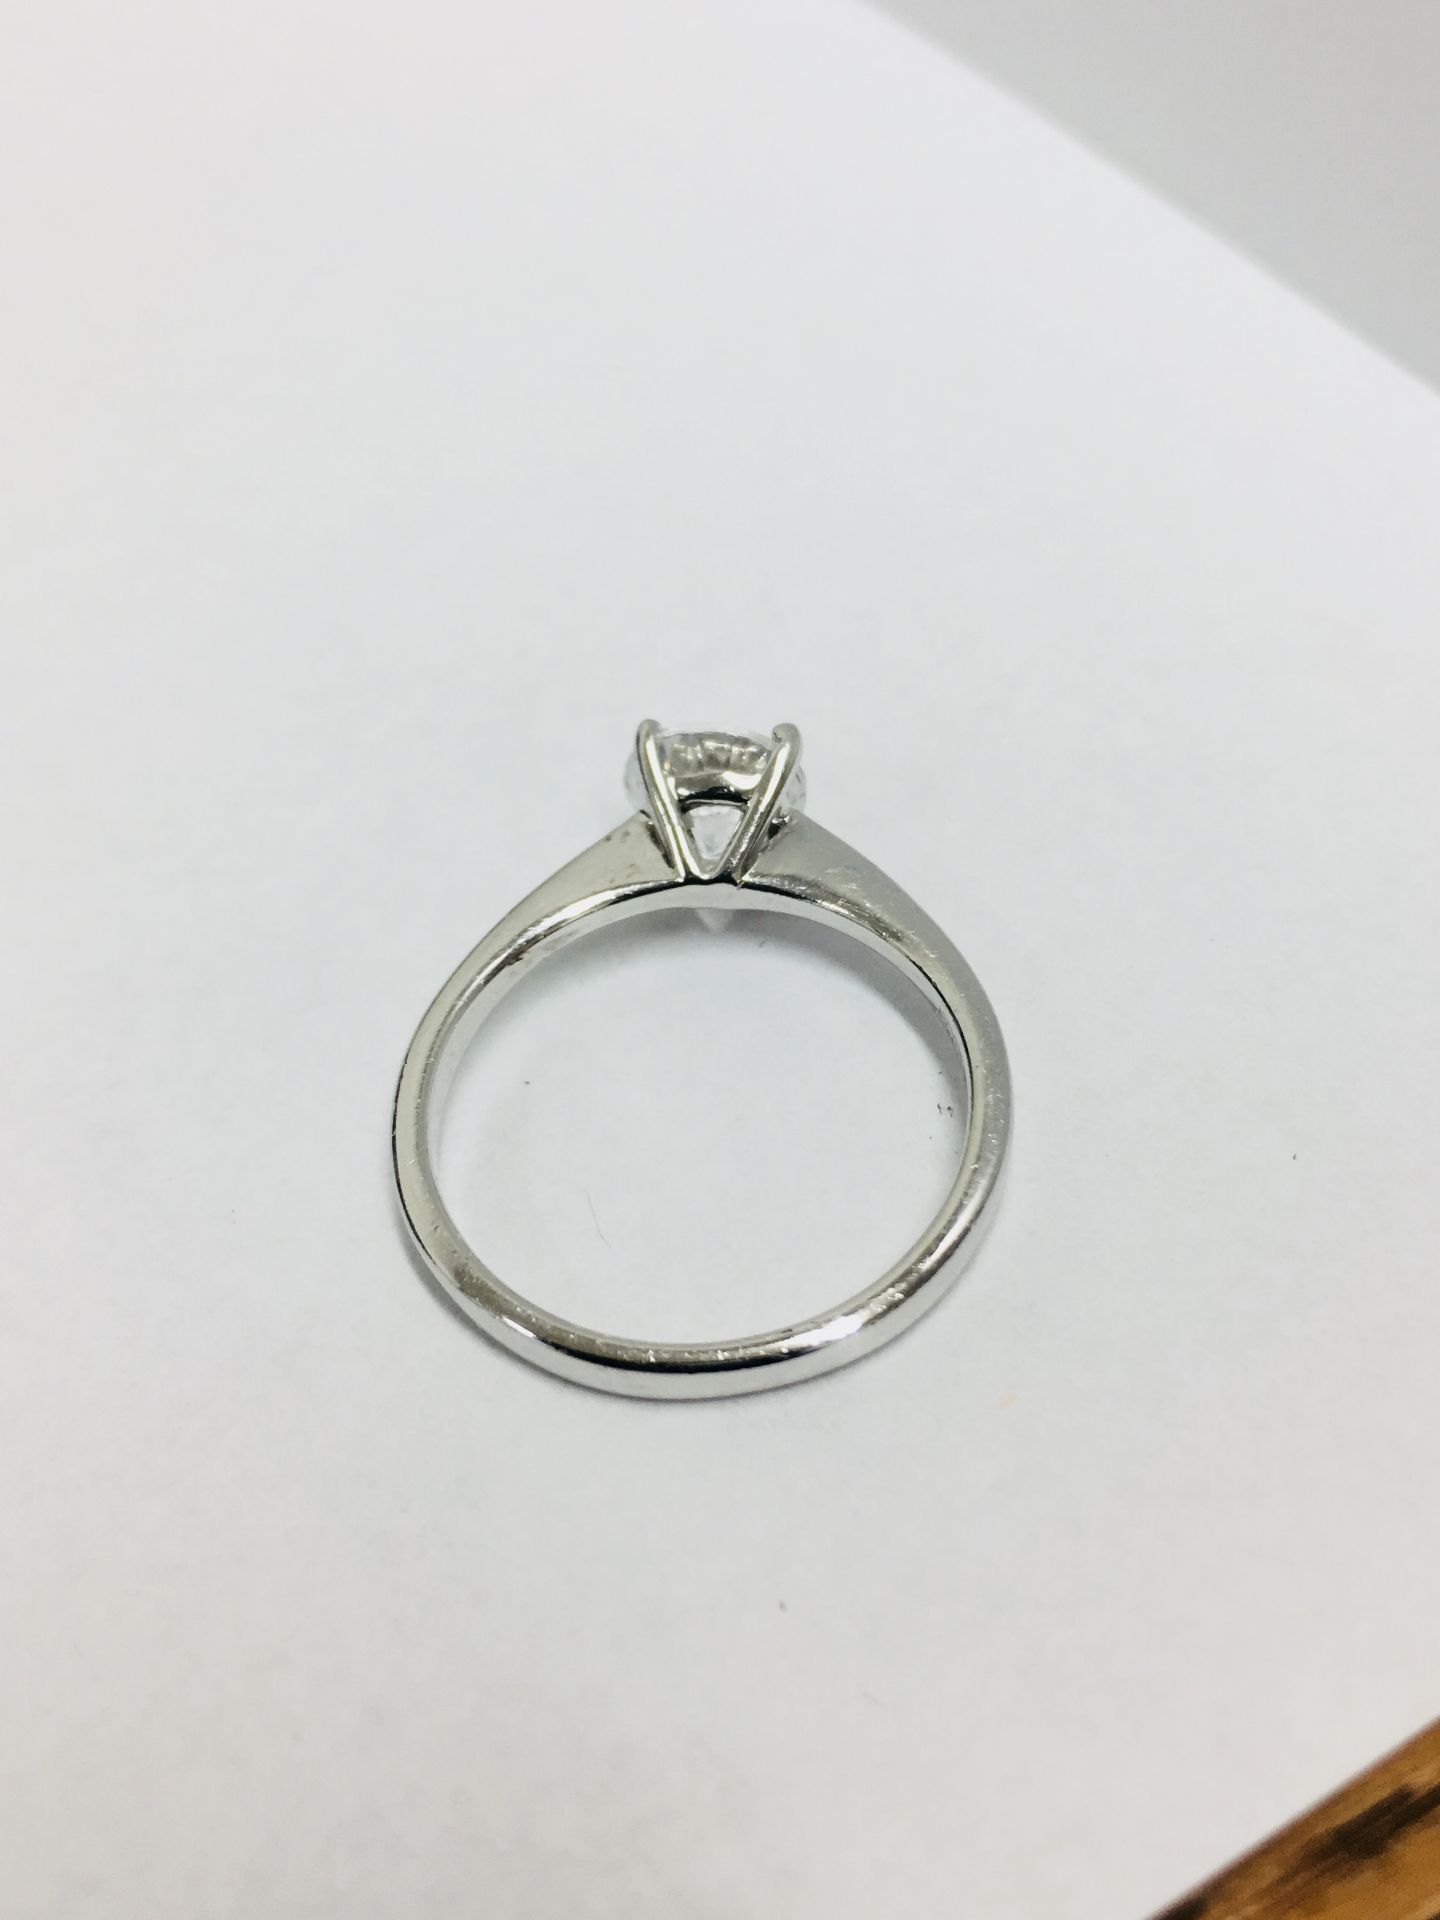 Platinum 4 claw diamond solitaire Ring,0.50ct brilliant cut diamond h colour vs clarity (clarity - Image 3 of 4